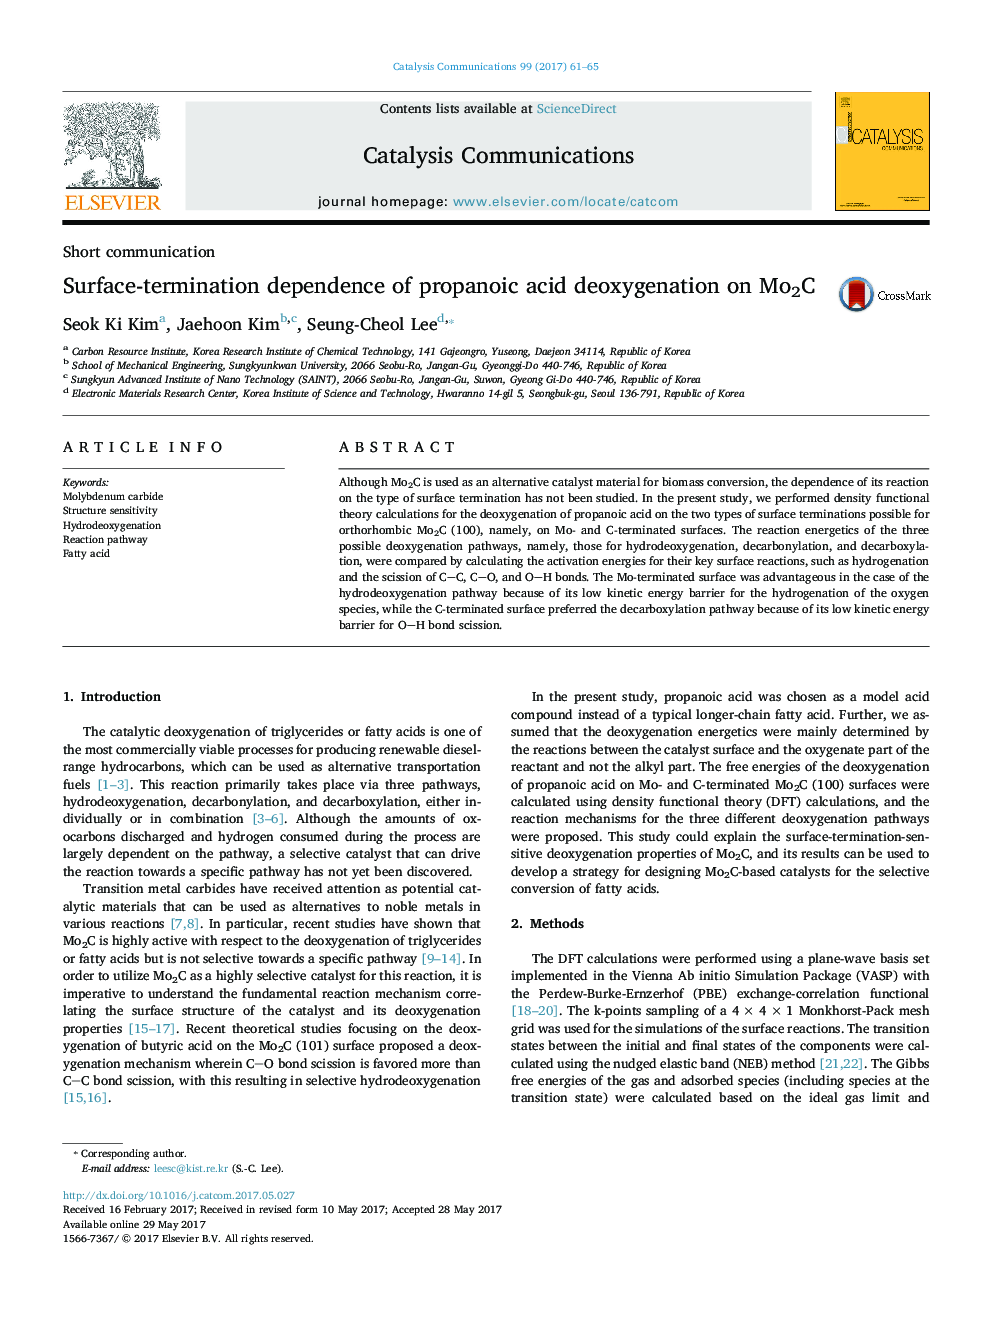 Surface-termination dependence of propanoic acid deoxygenation on Mo2C